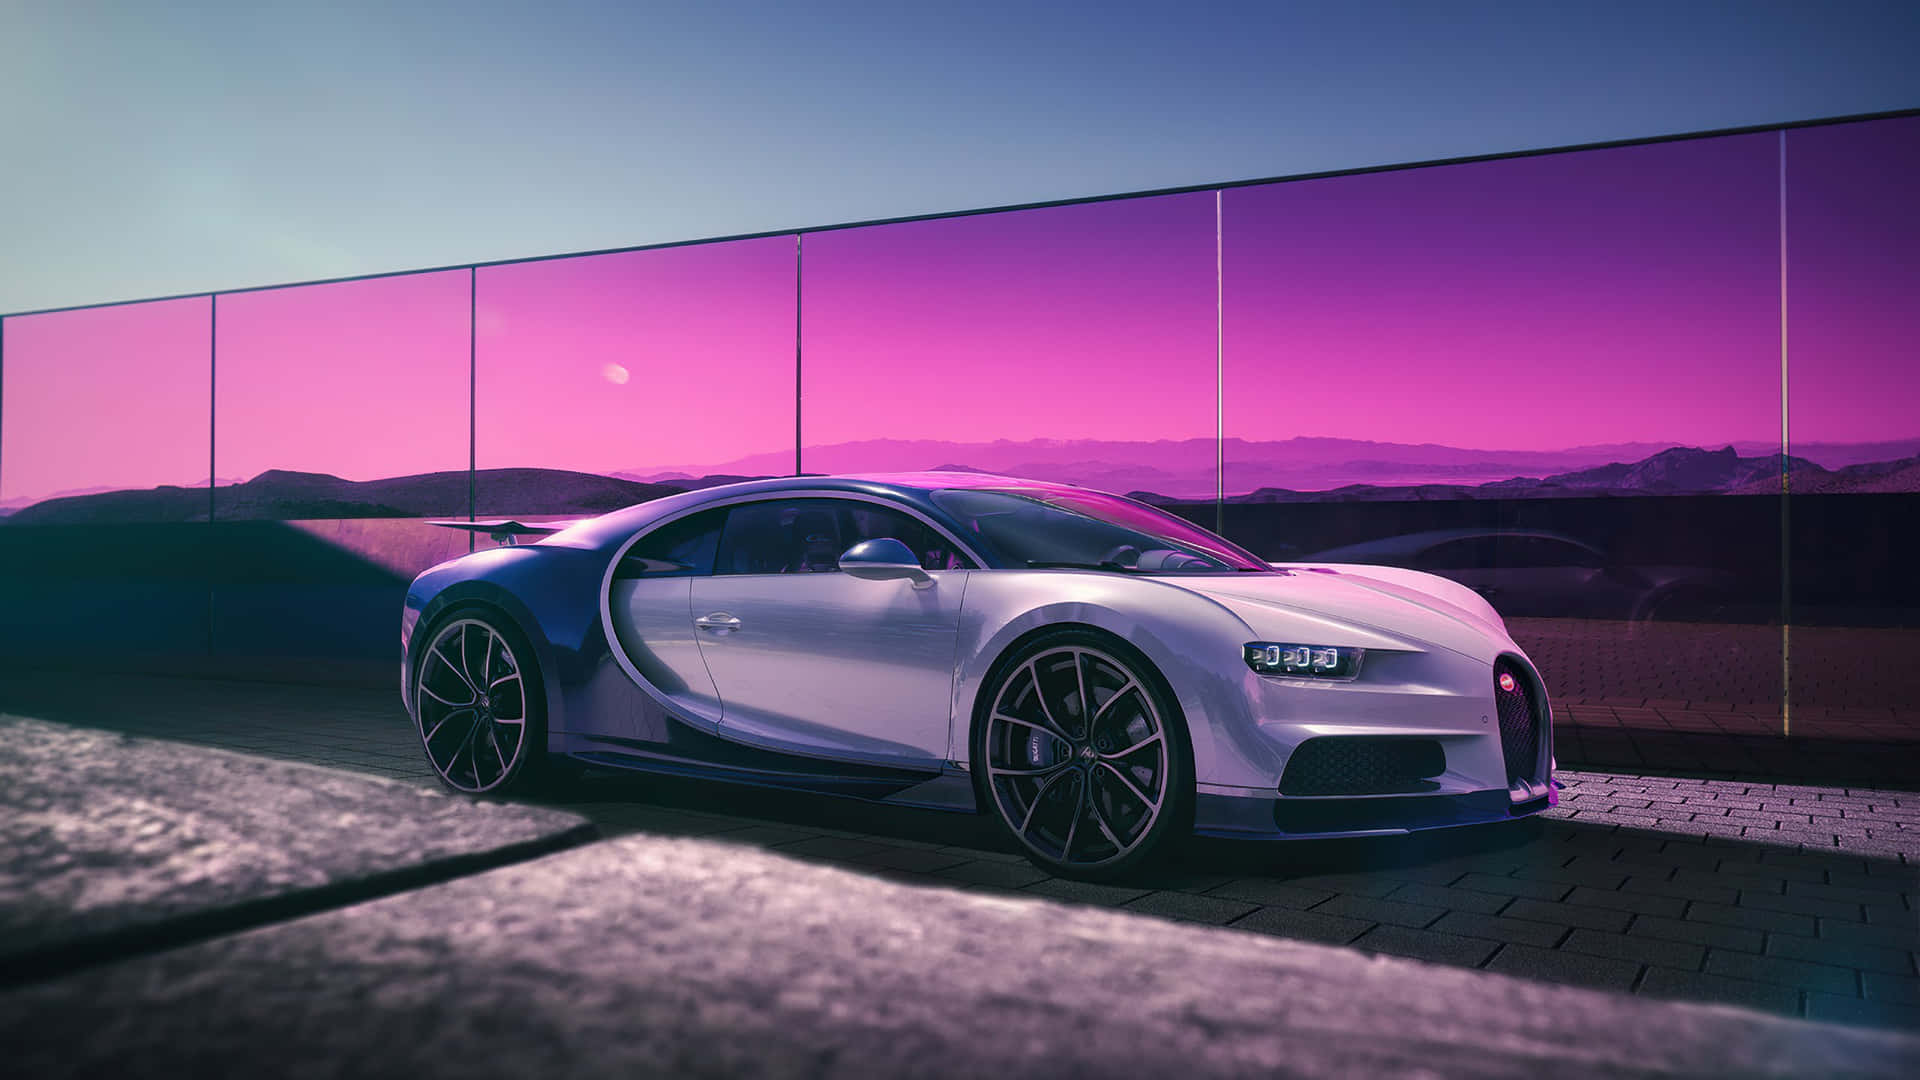 Sleek Bugatti Chiron on the Road Wallpaper